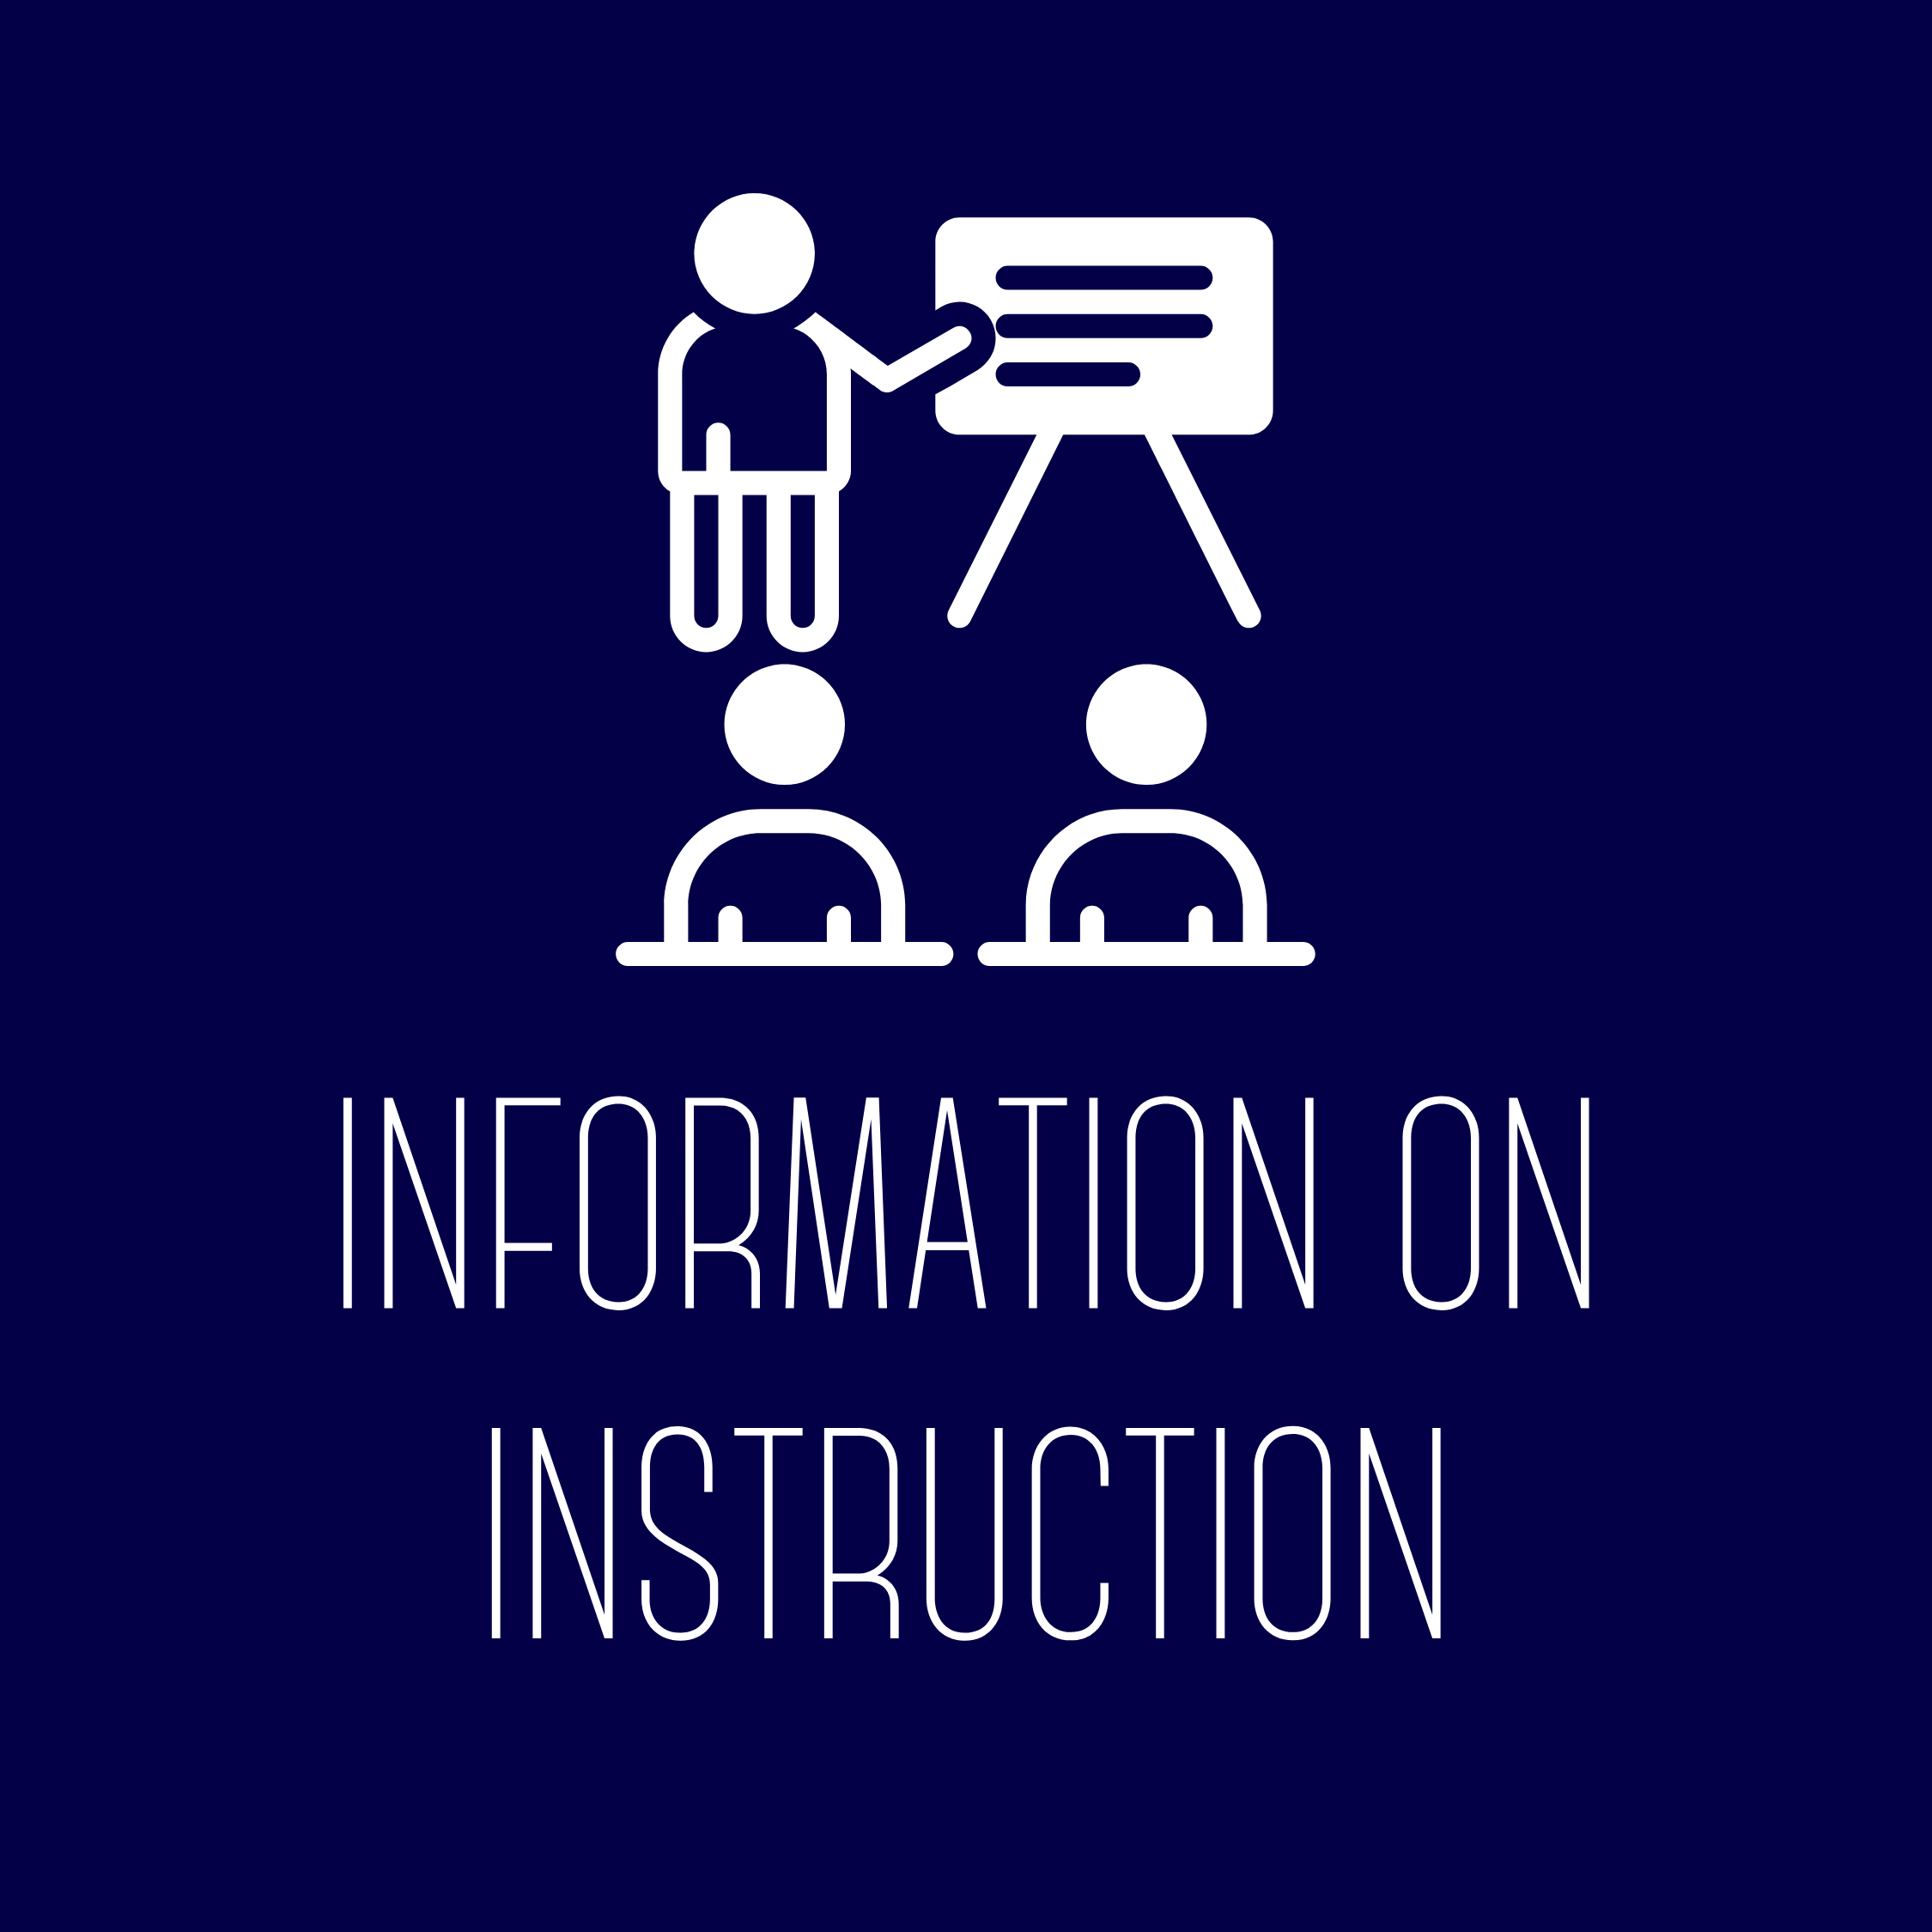 Information on Instruction